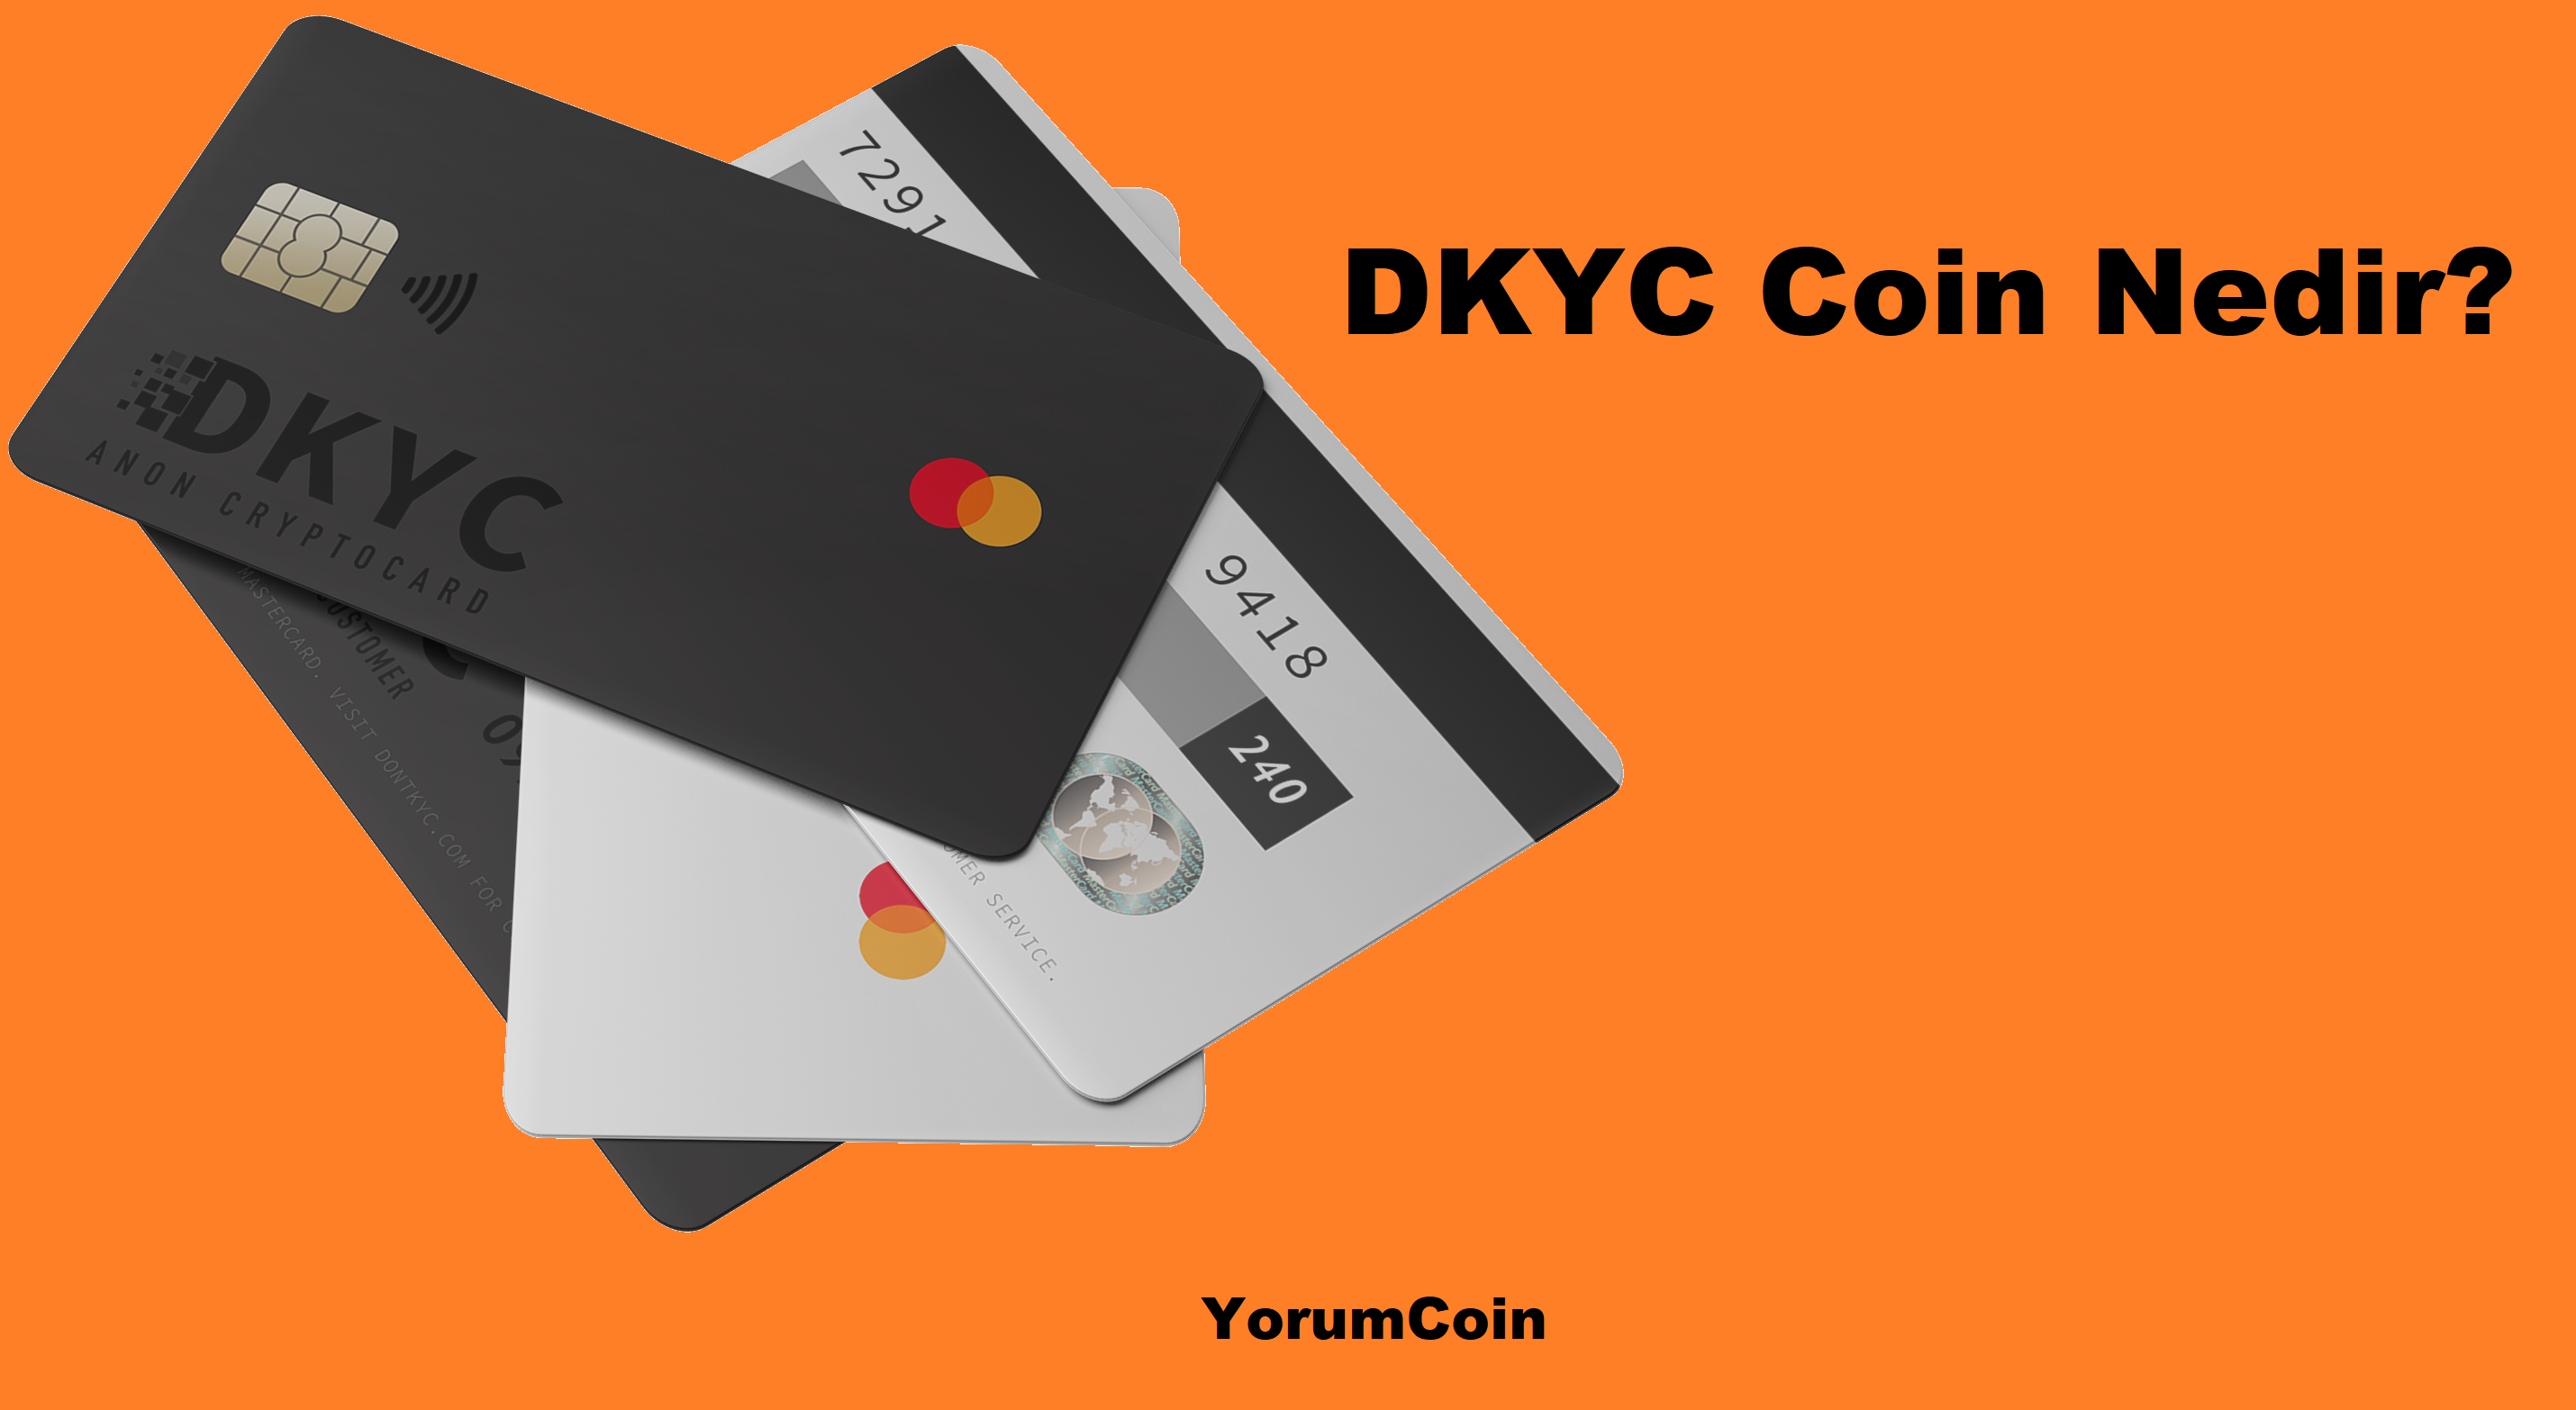 Don’t KYC (DKYC) Coin Nedir, Yorum